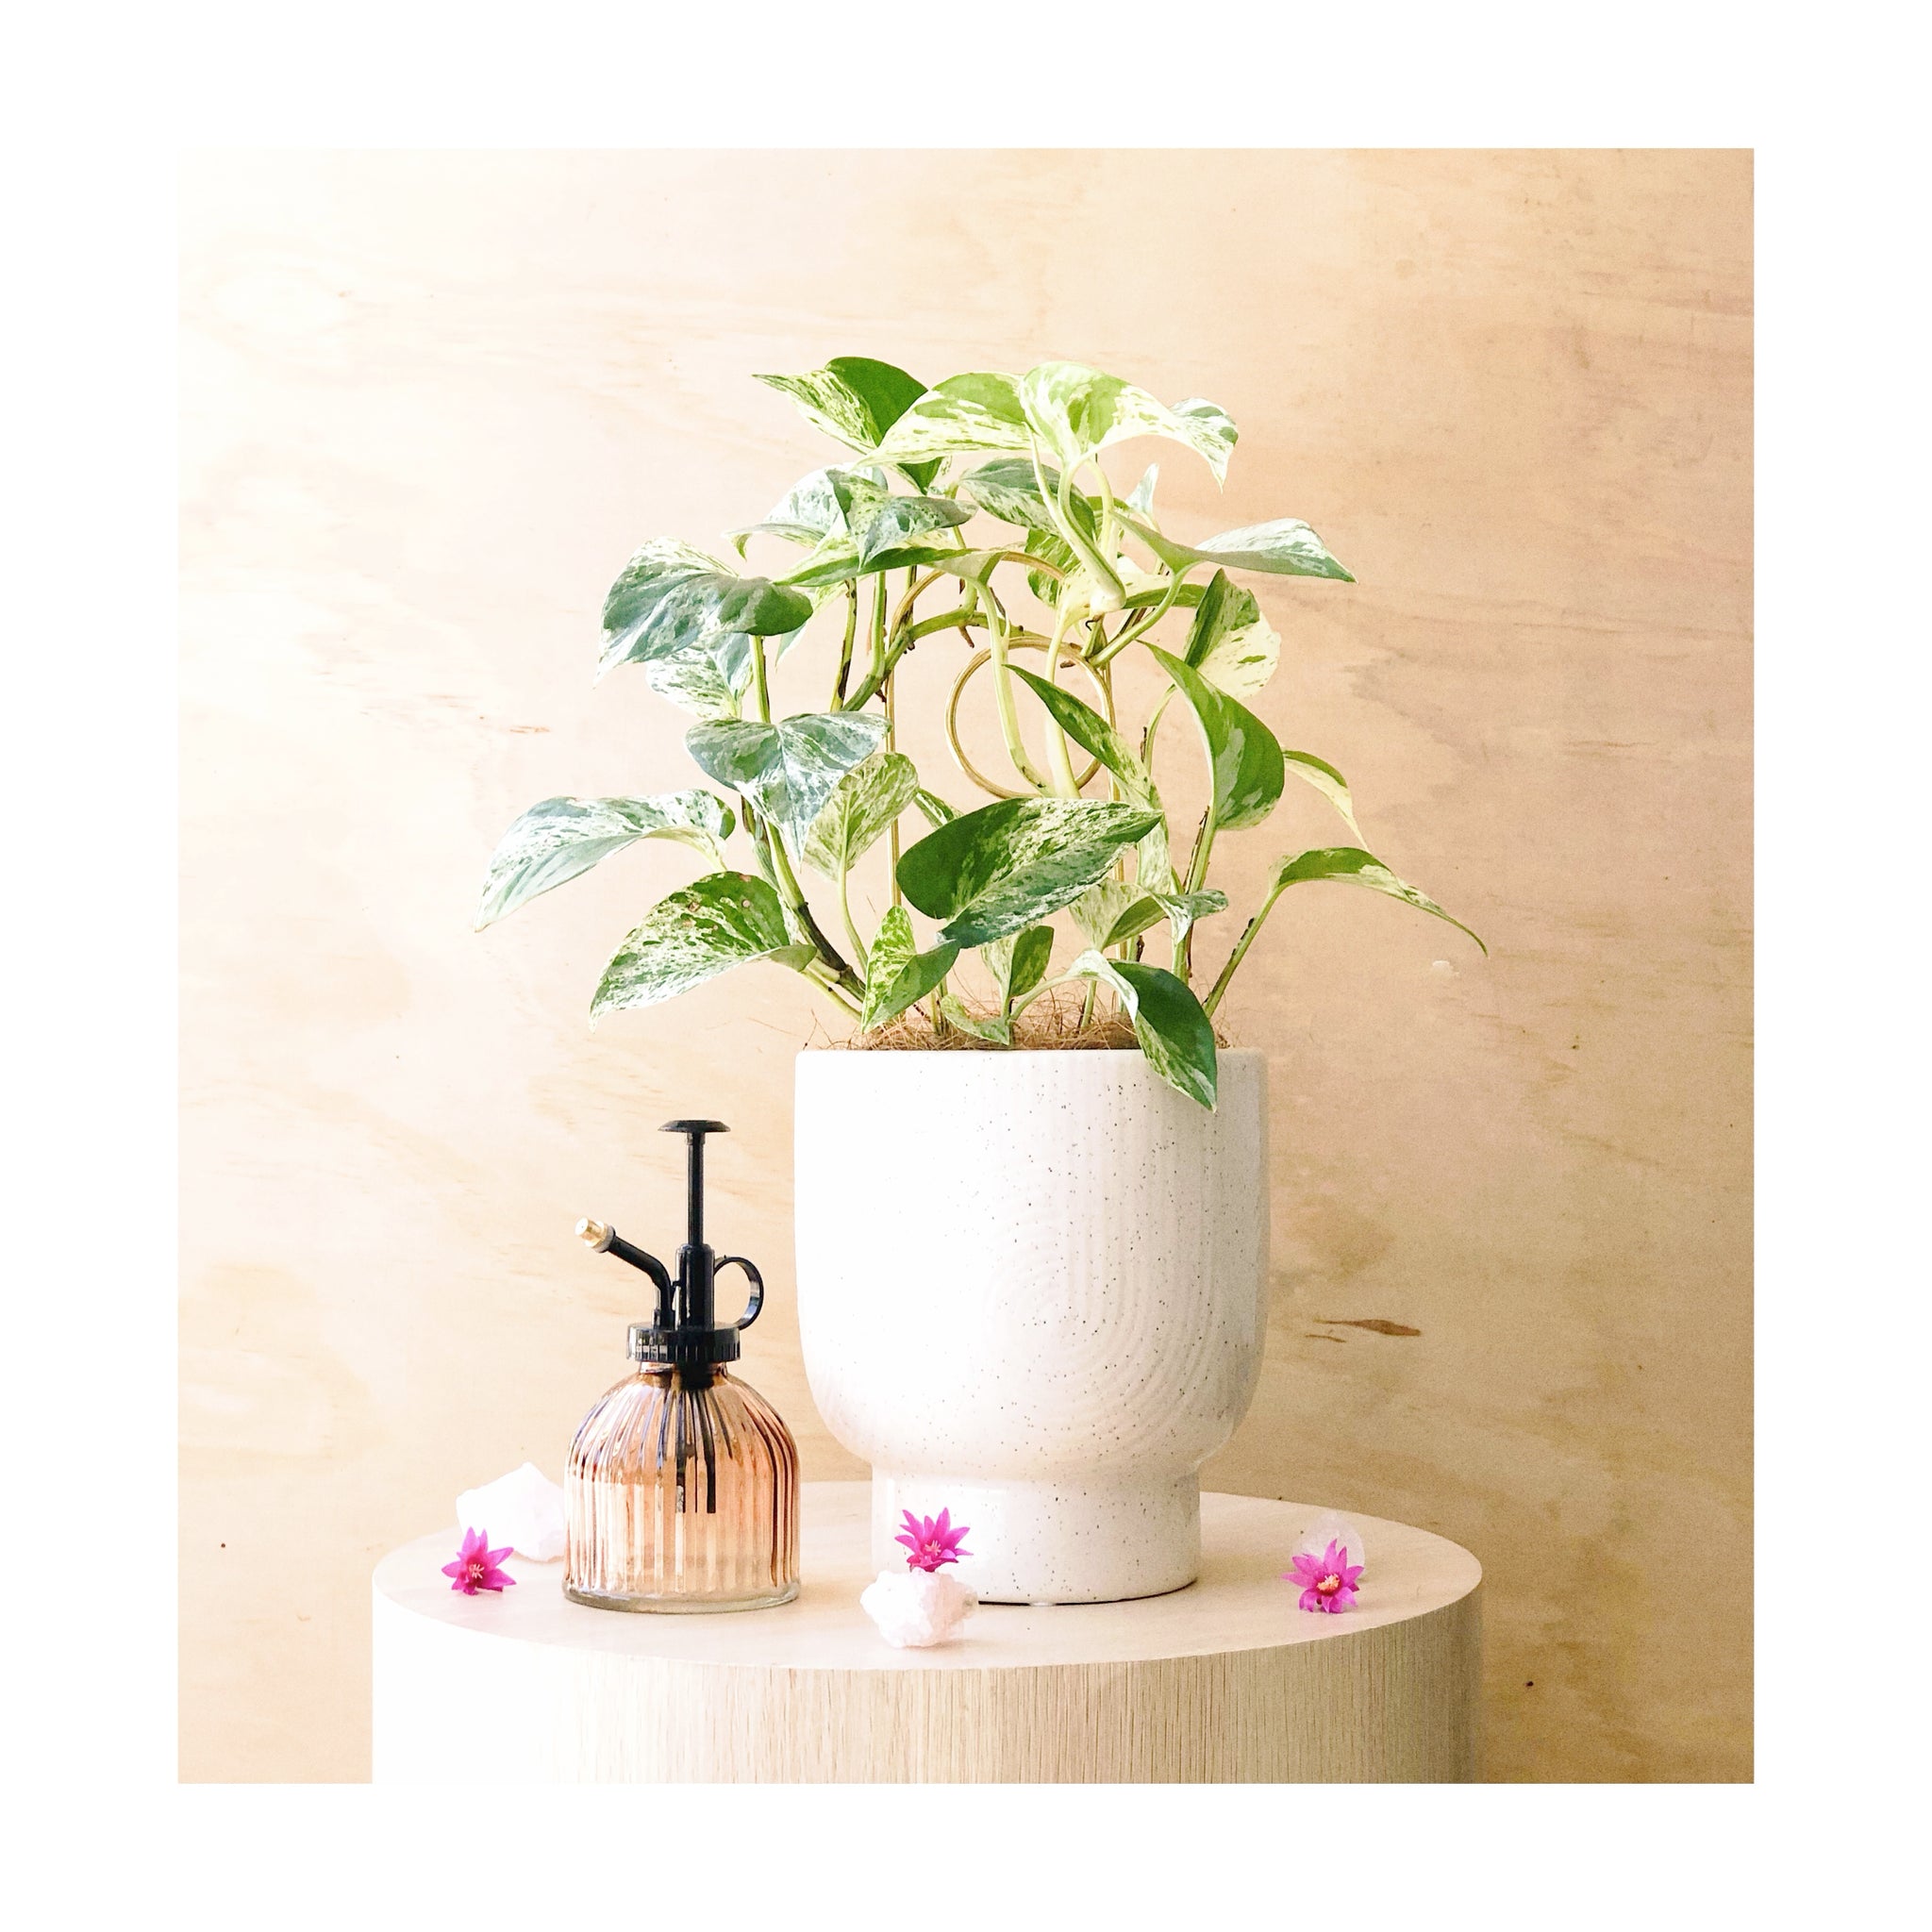 Support Plant Gift Hamper | Devils Ivy Marble Queen + Orbit Ceramic Pot + Loop Brass Plant Stake + Amber Plant Mister